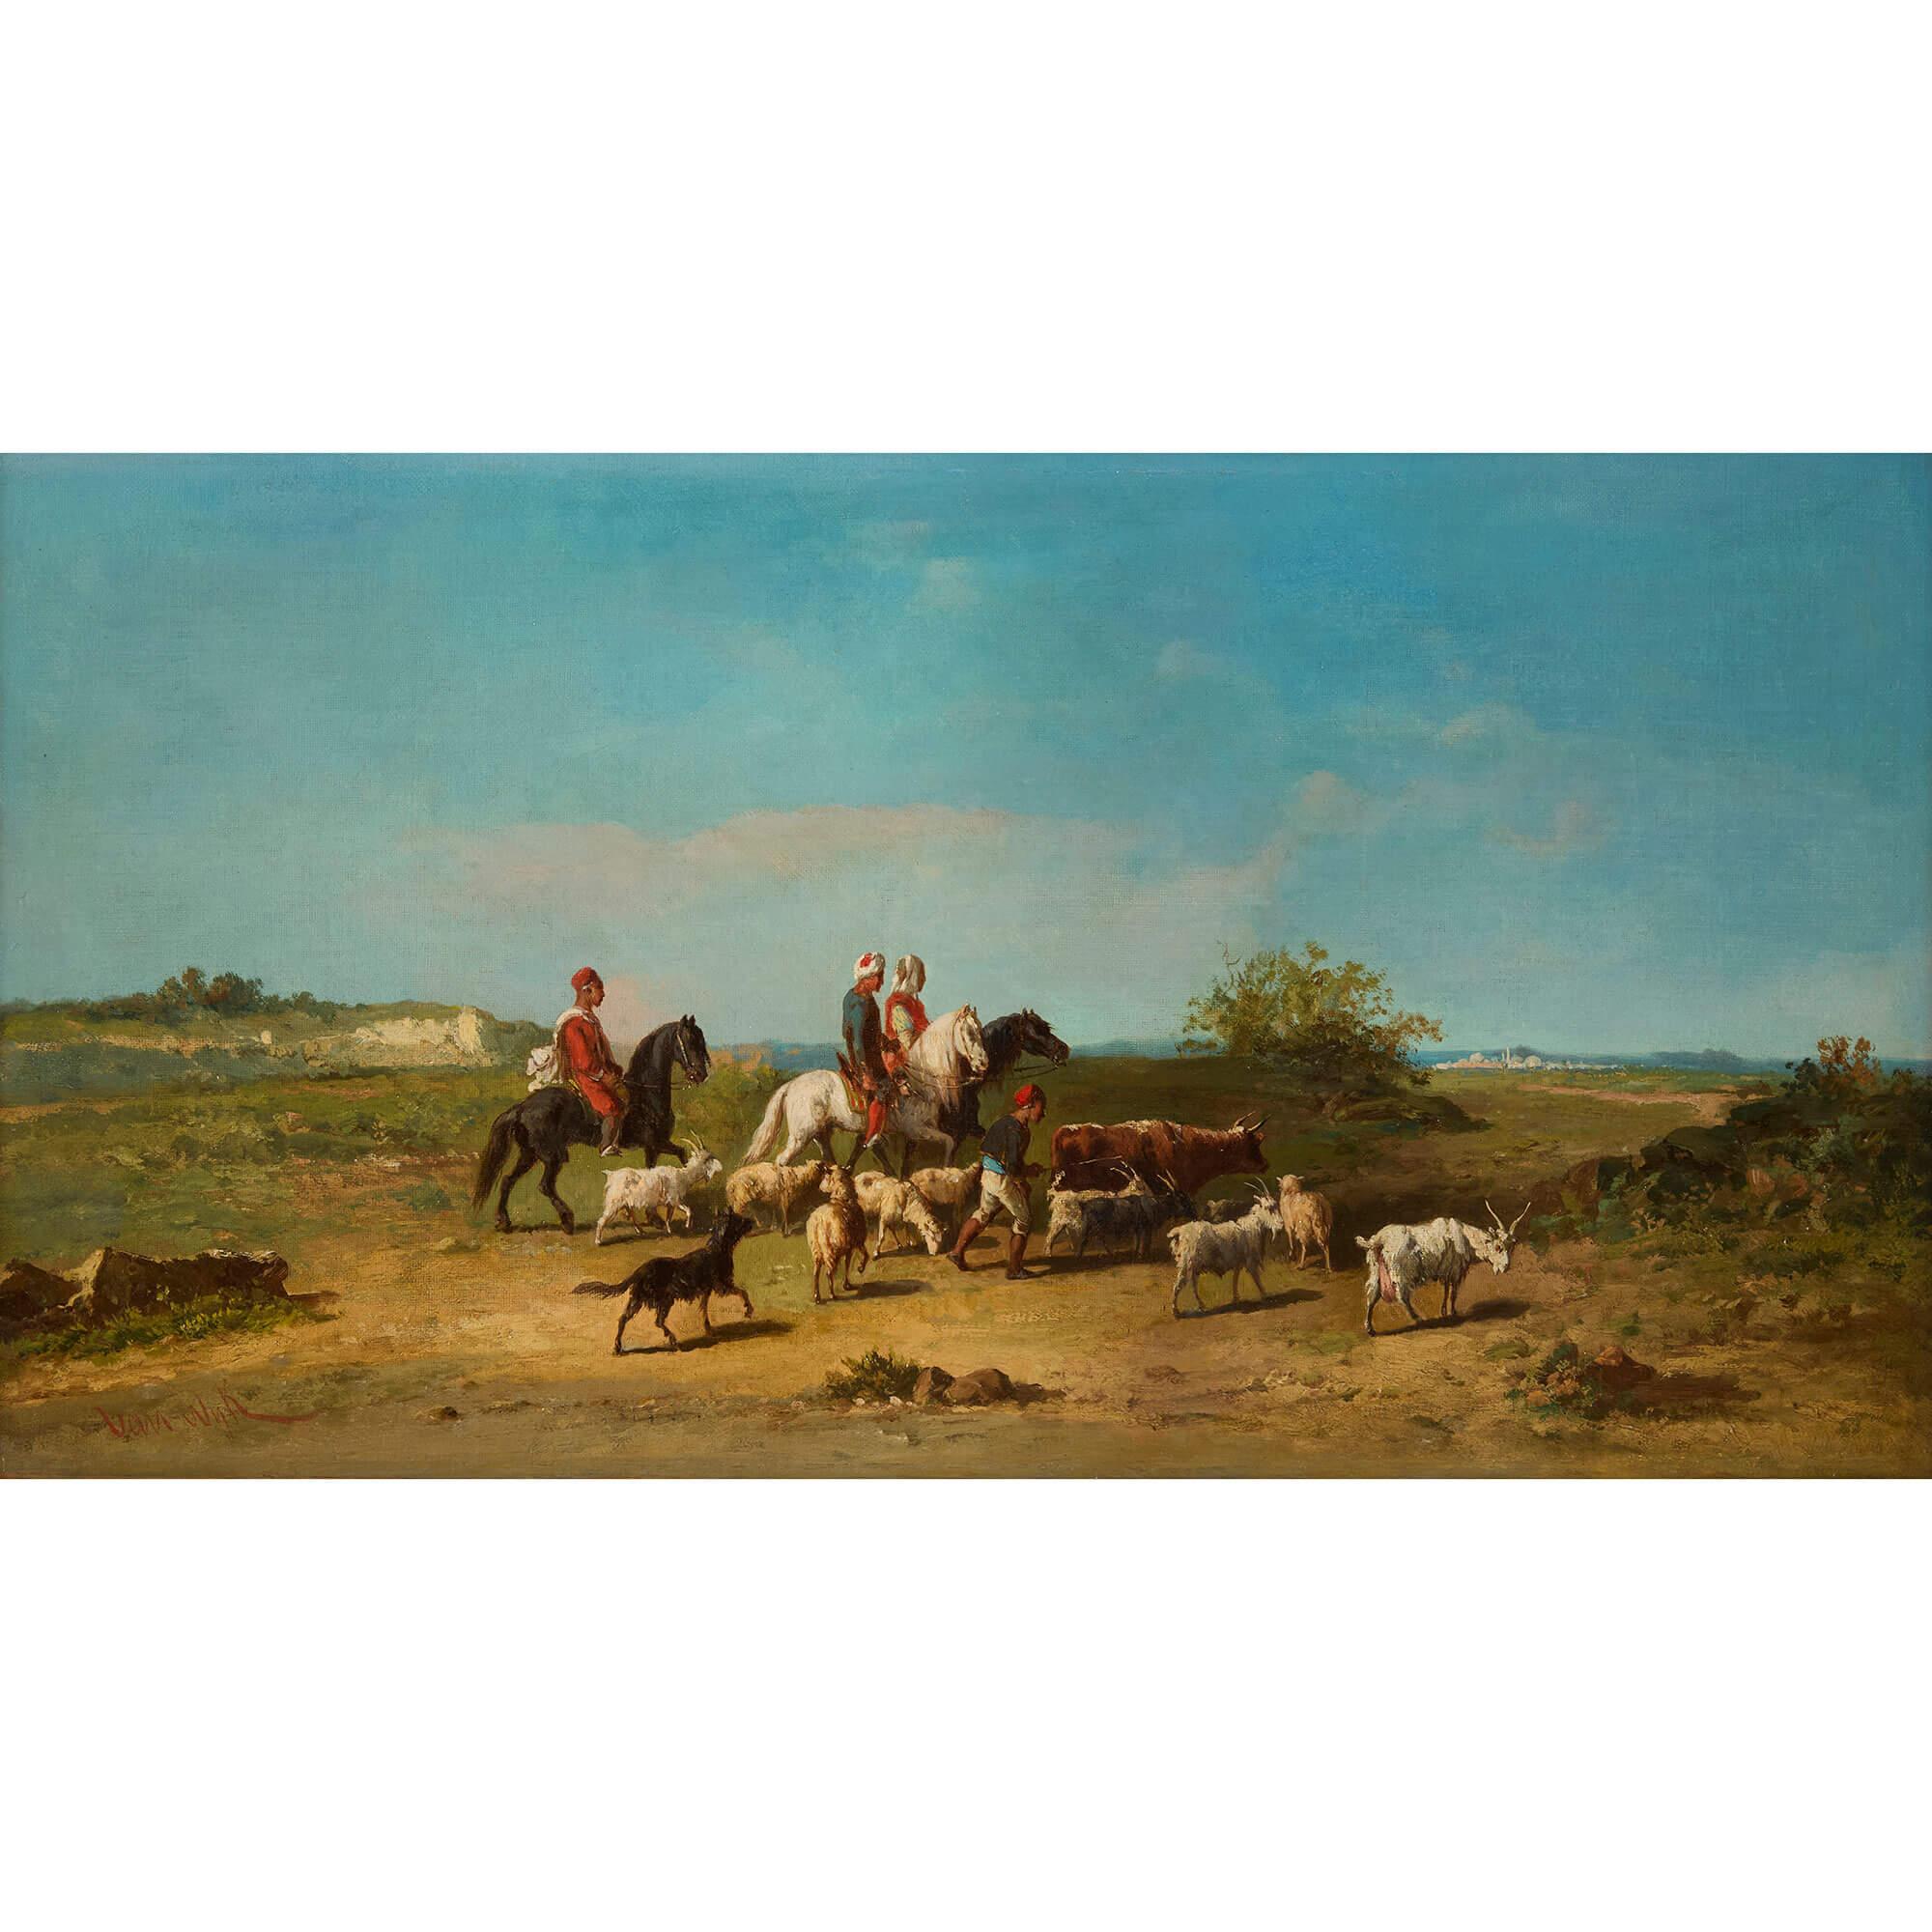 Set of Four Orientalist Landscape Paintings by van Wijk  For Sale 1